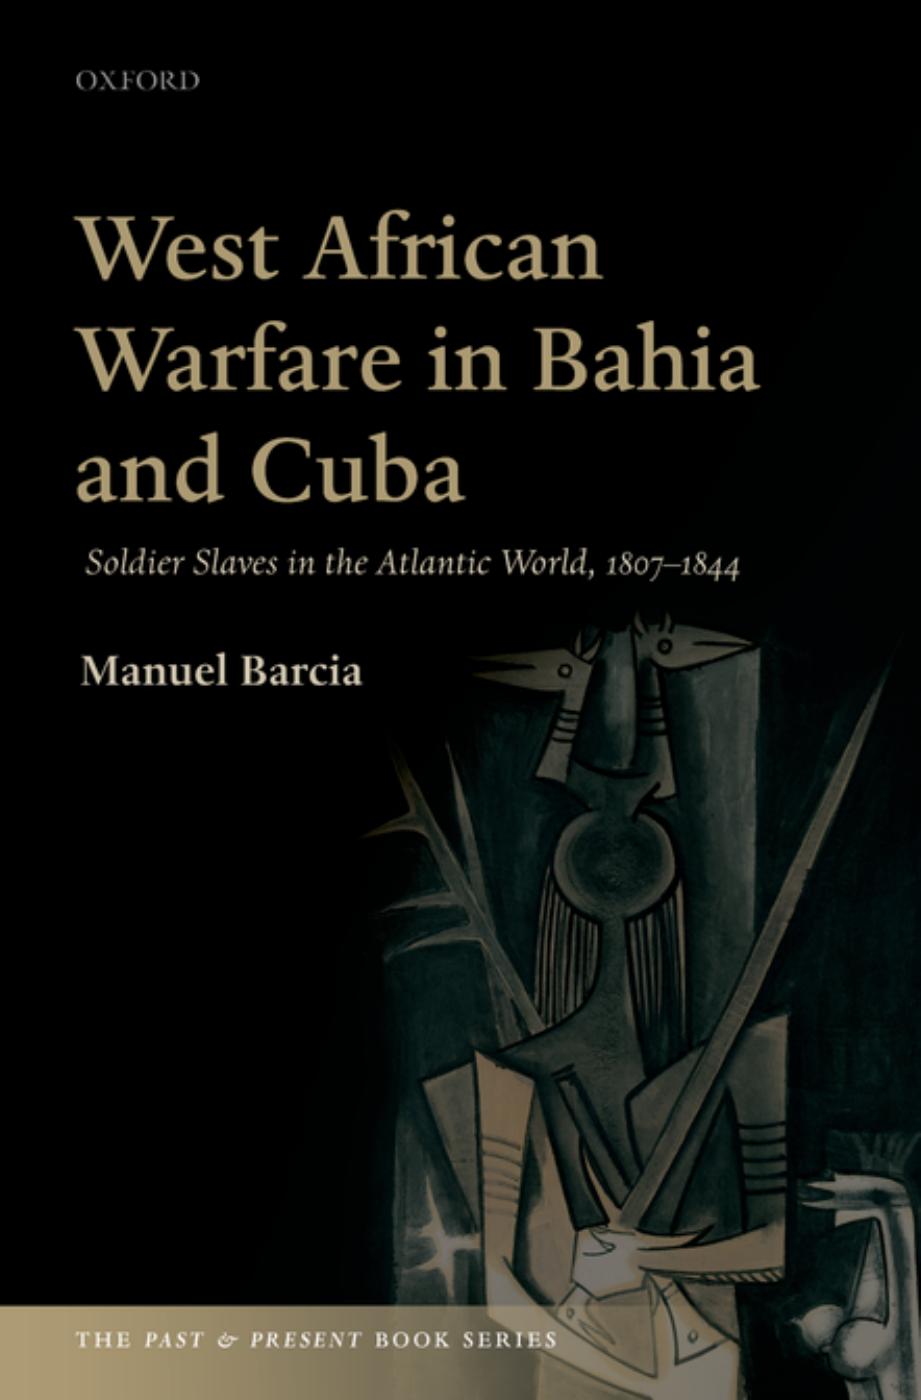 Manuel Barcia: West African Warfare in Bahia and Cuba (2016, Oxford University Press)